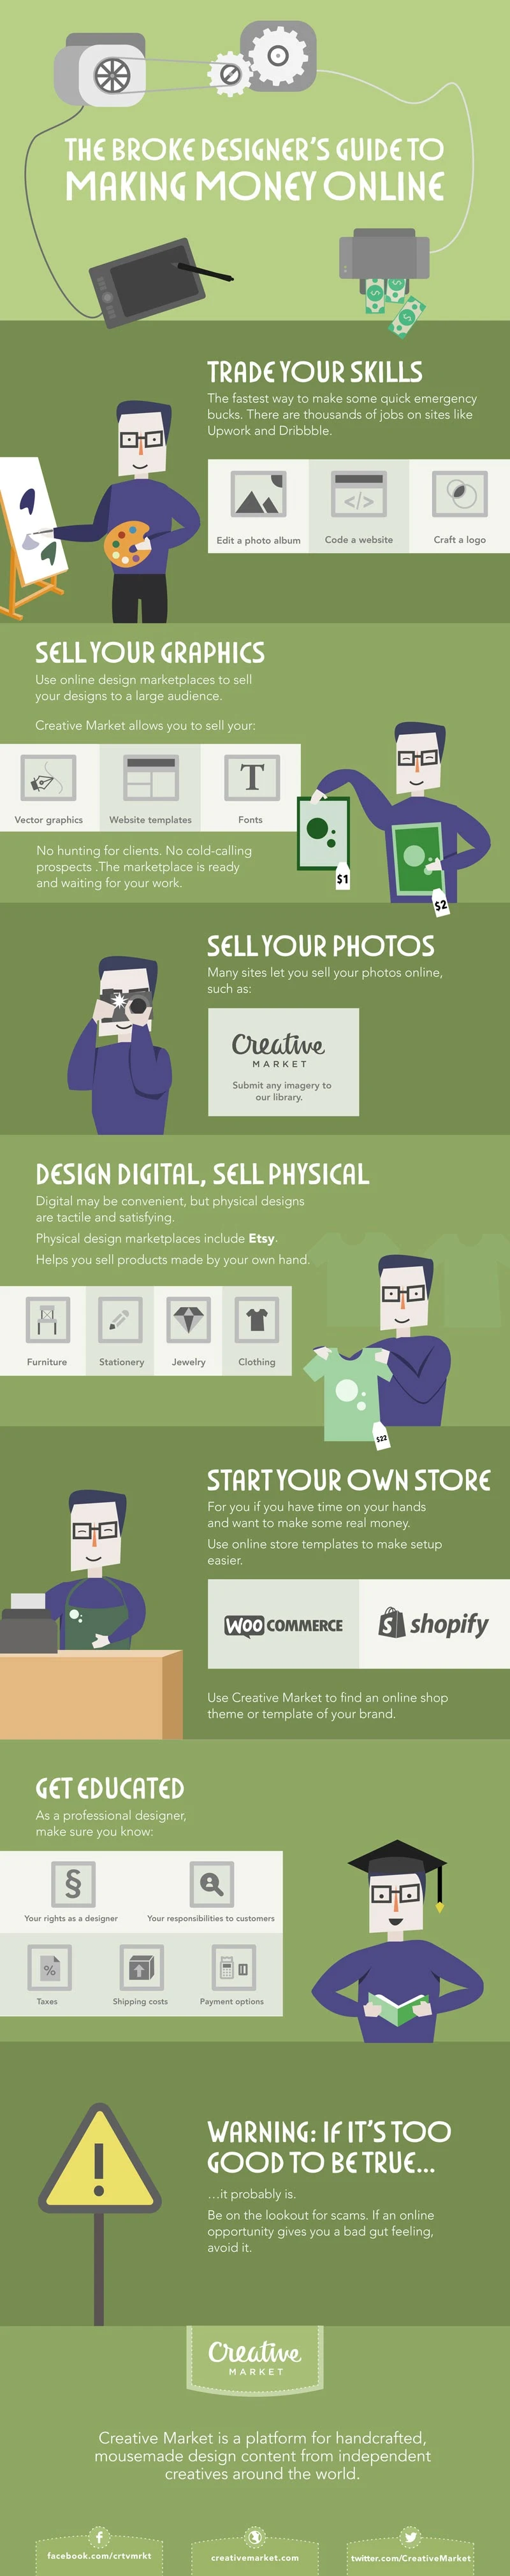 The Broke Designer's Guide to Making Money Online - #infographic